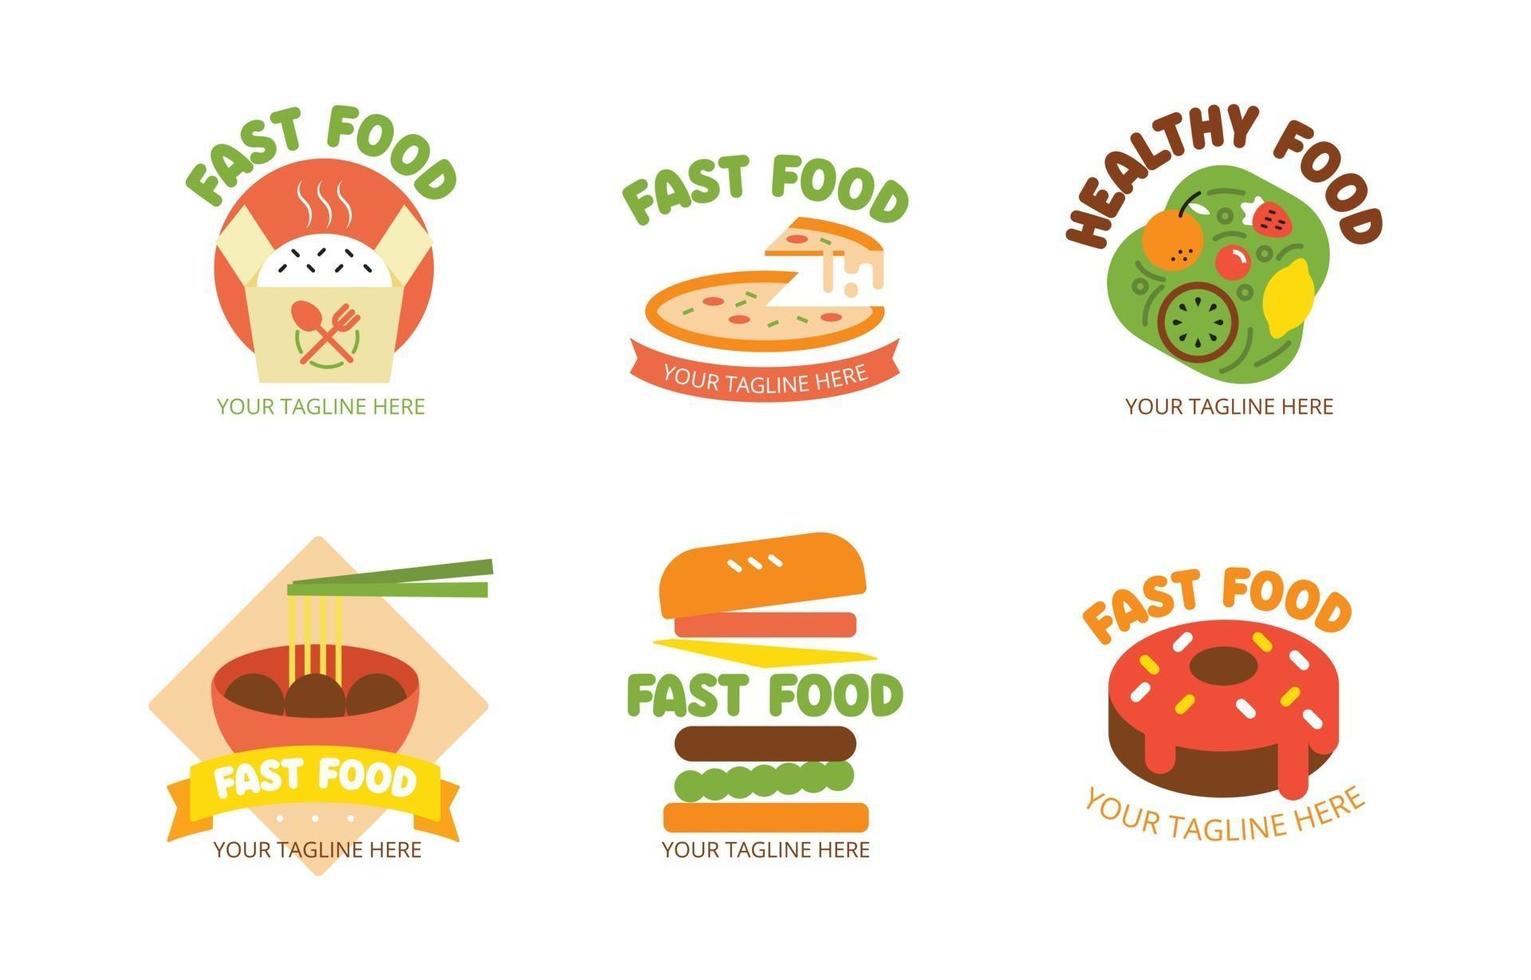 Food Logo Collection vector